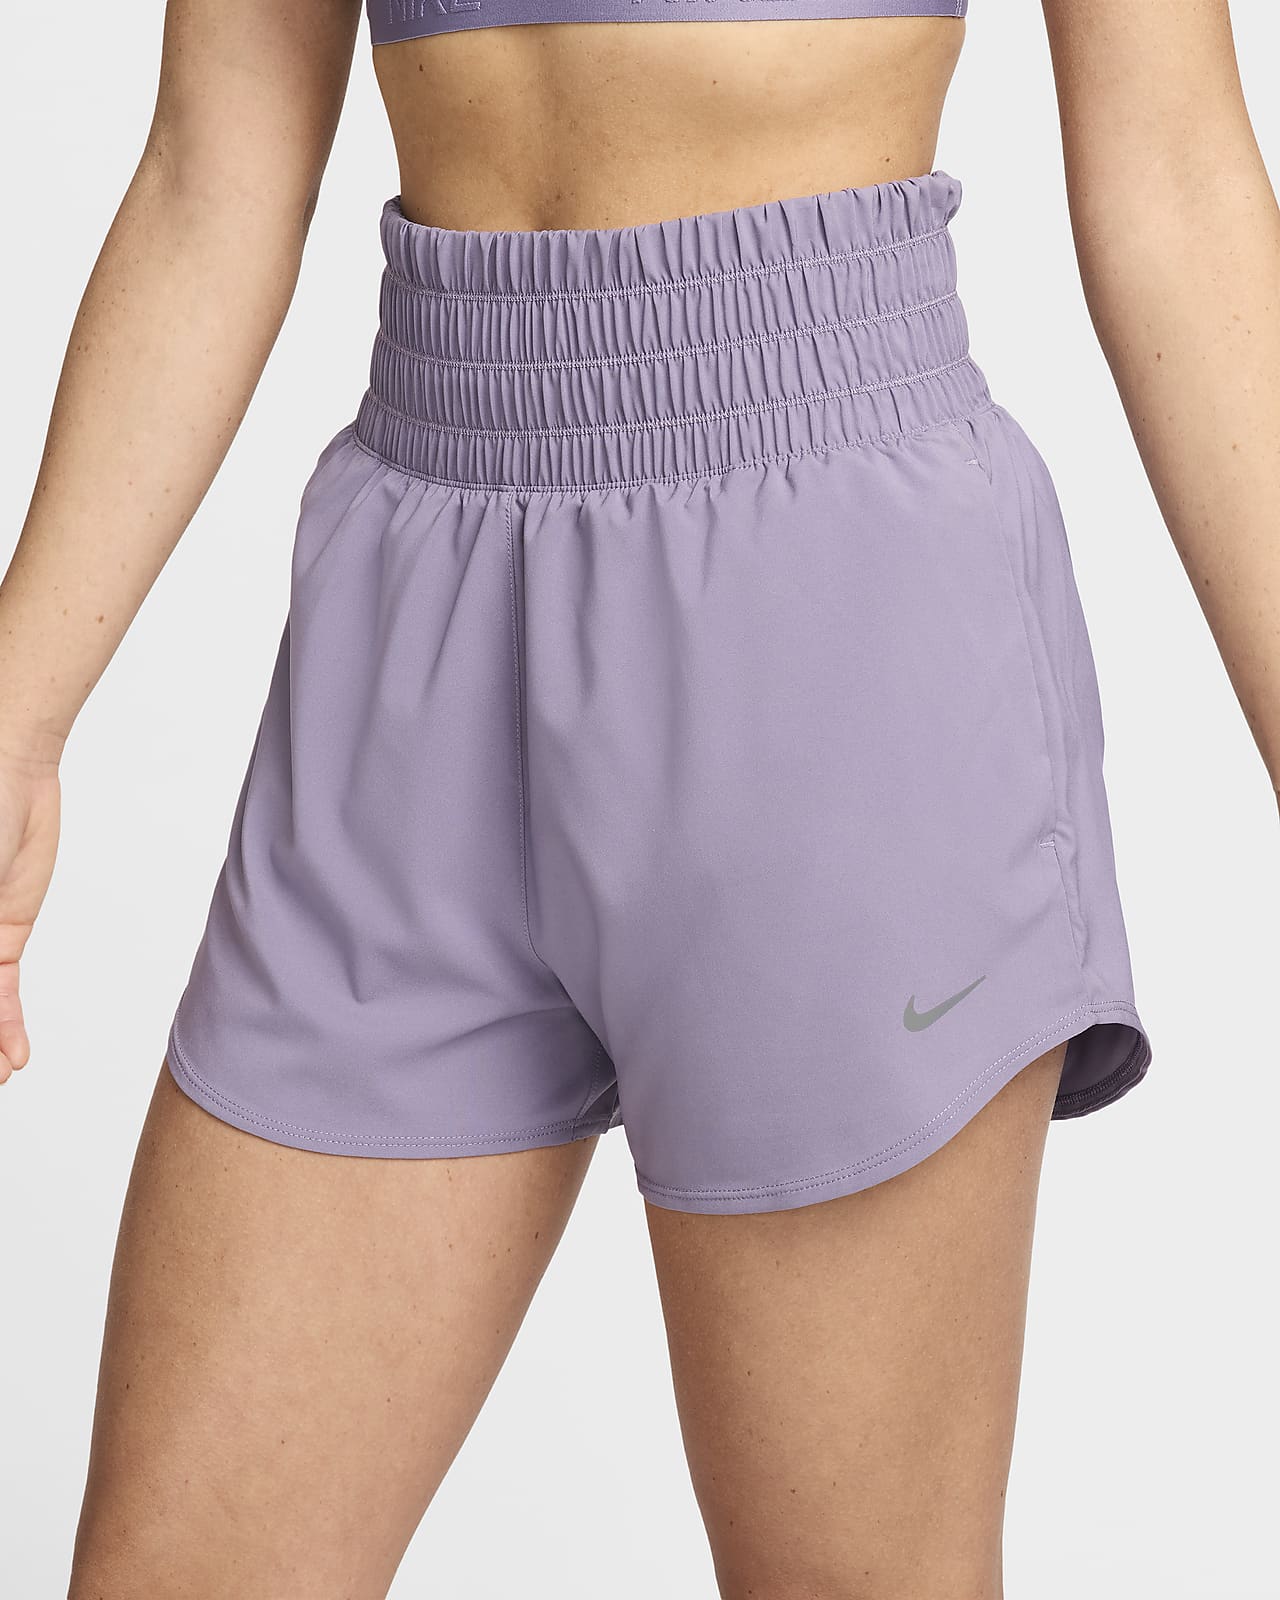 Womens Shorts Women's Workout Running Shorts Elastic High Waisted Athletic  Shorts Yoga Sport Gym Shorts Short, Light Blue, M